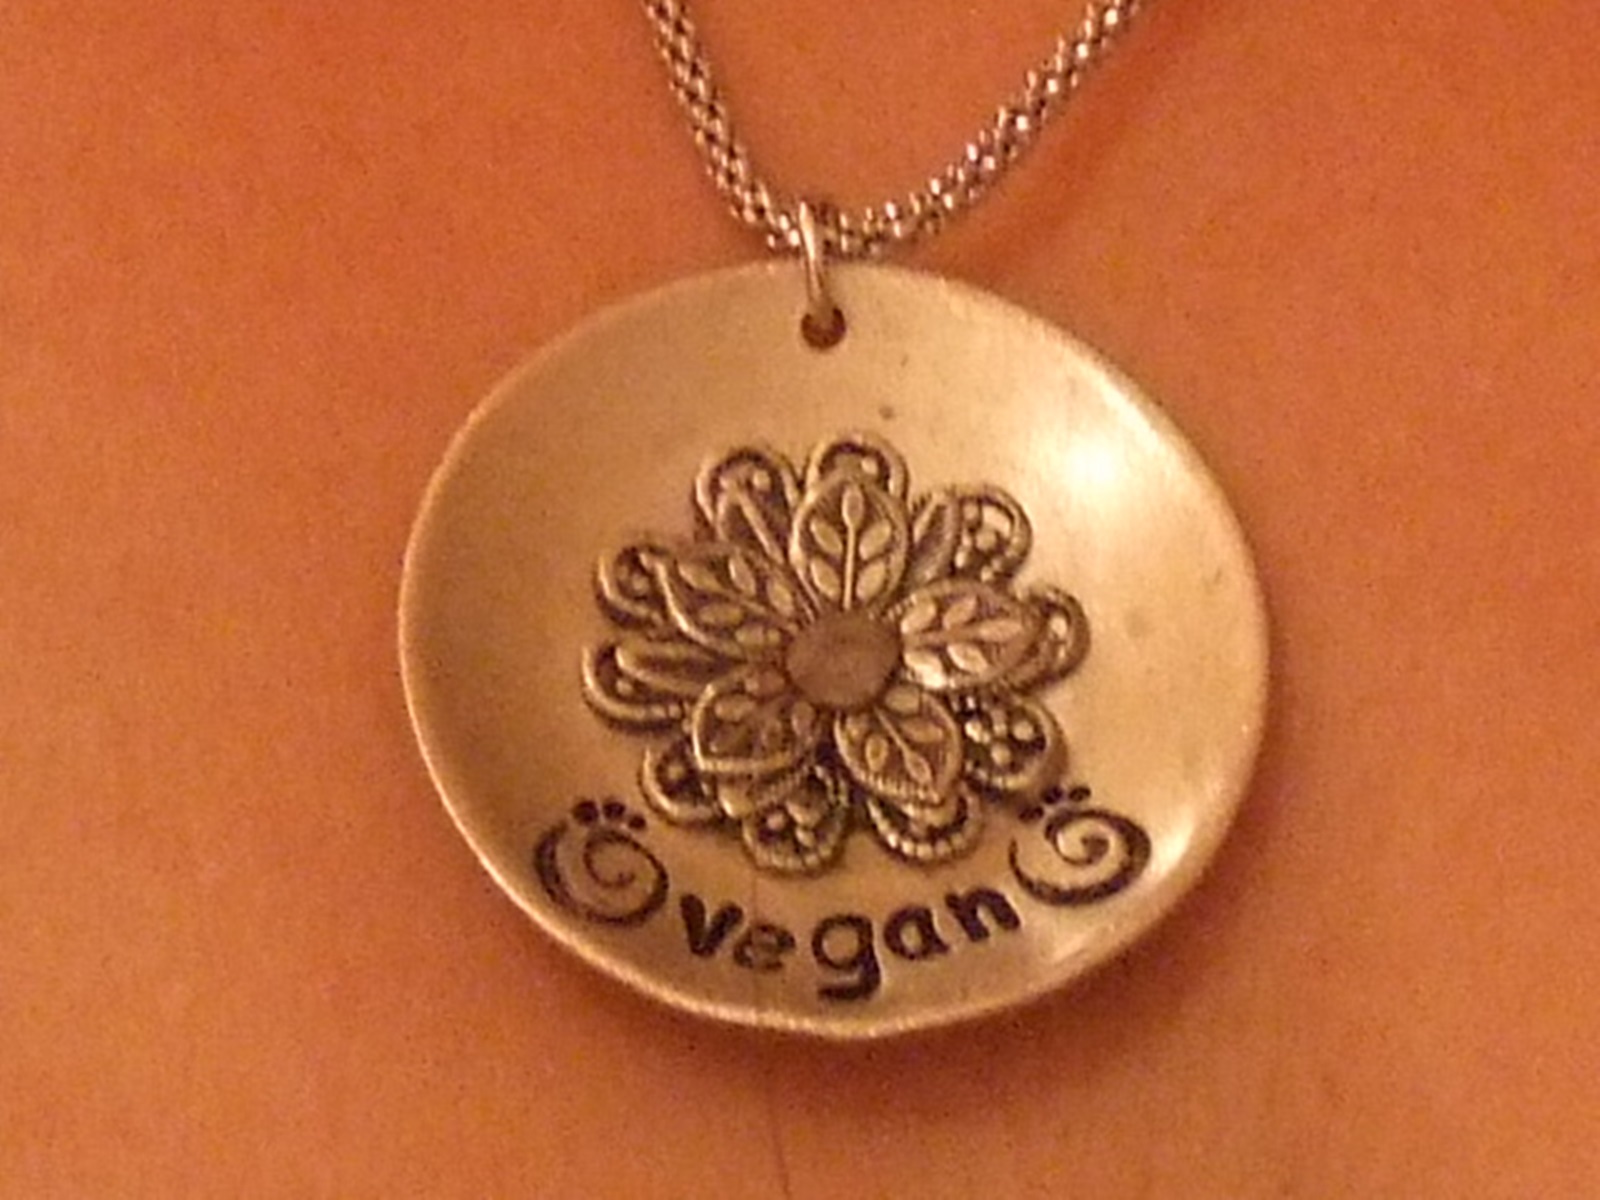 vegan necklace